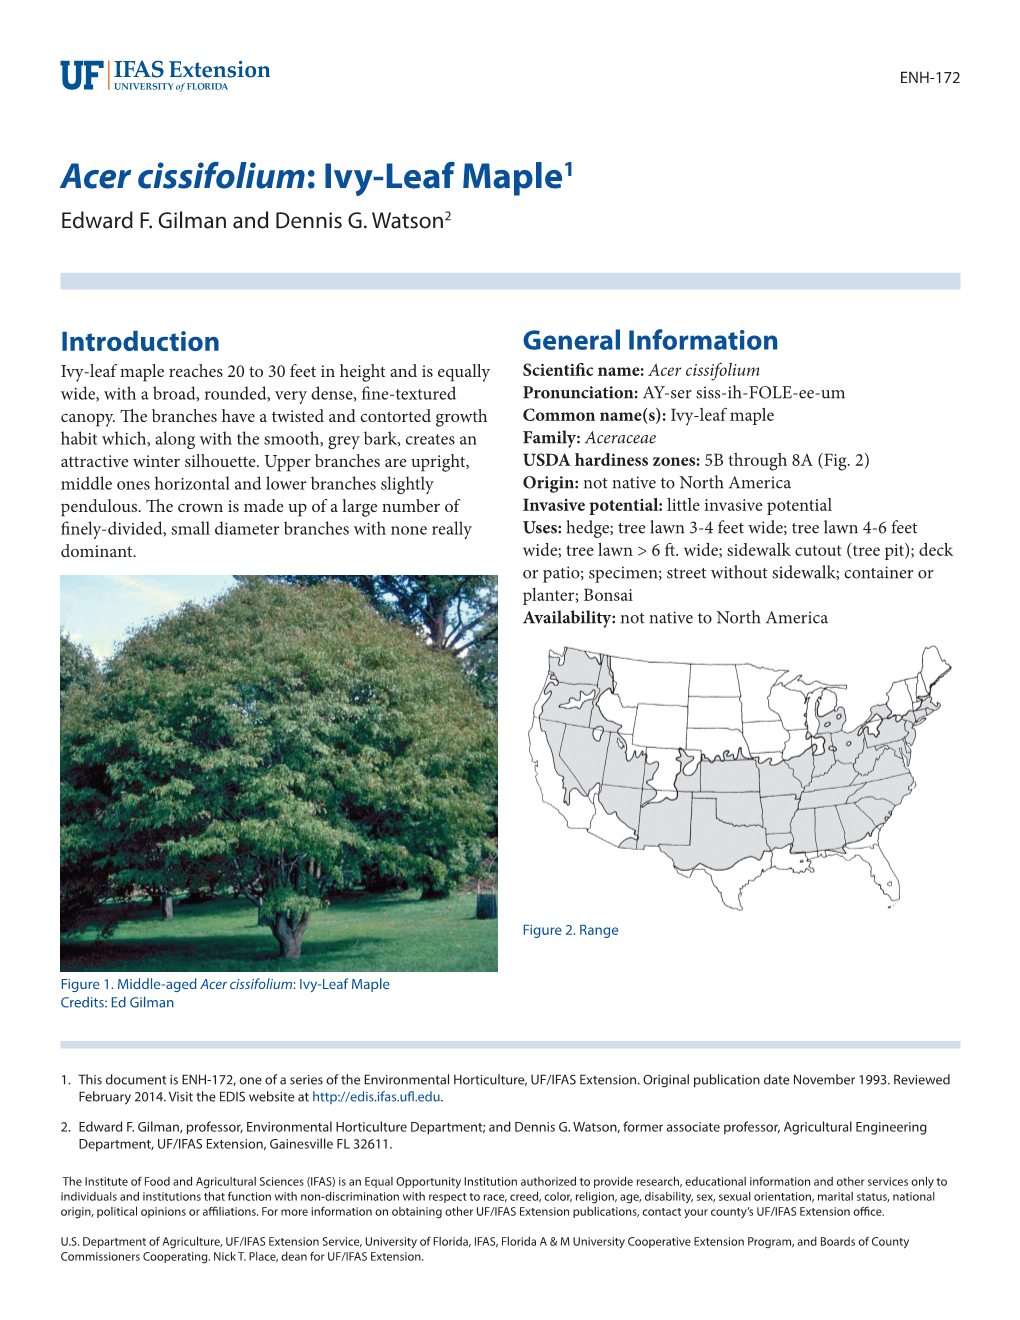 Acer Cissifolium: Ivy-Leaf Maple1 Edward F